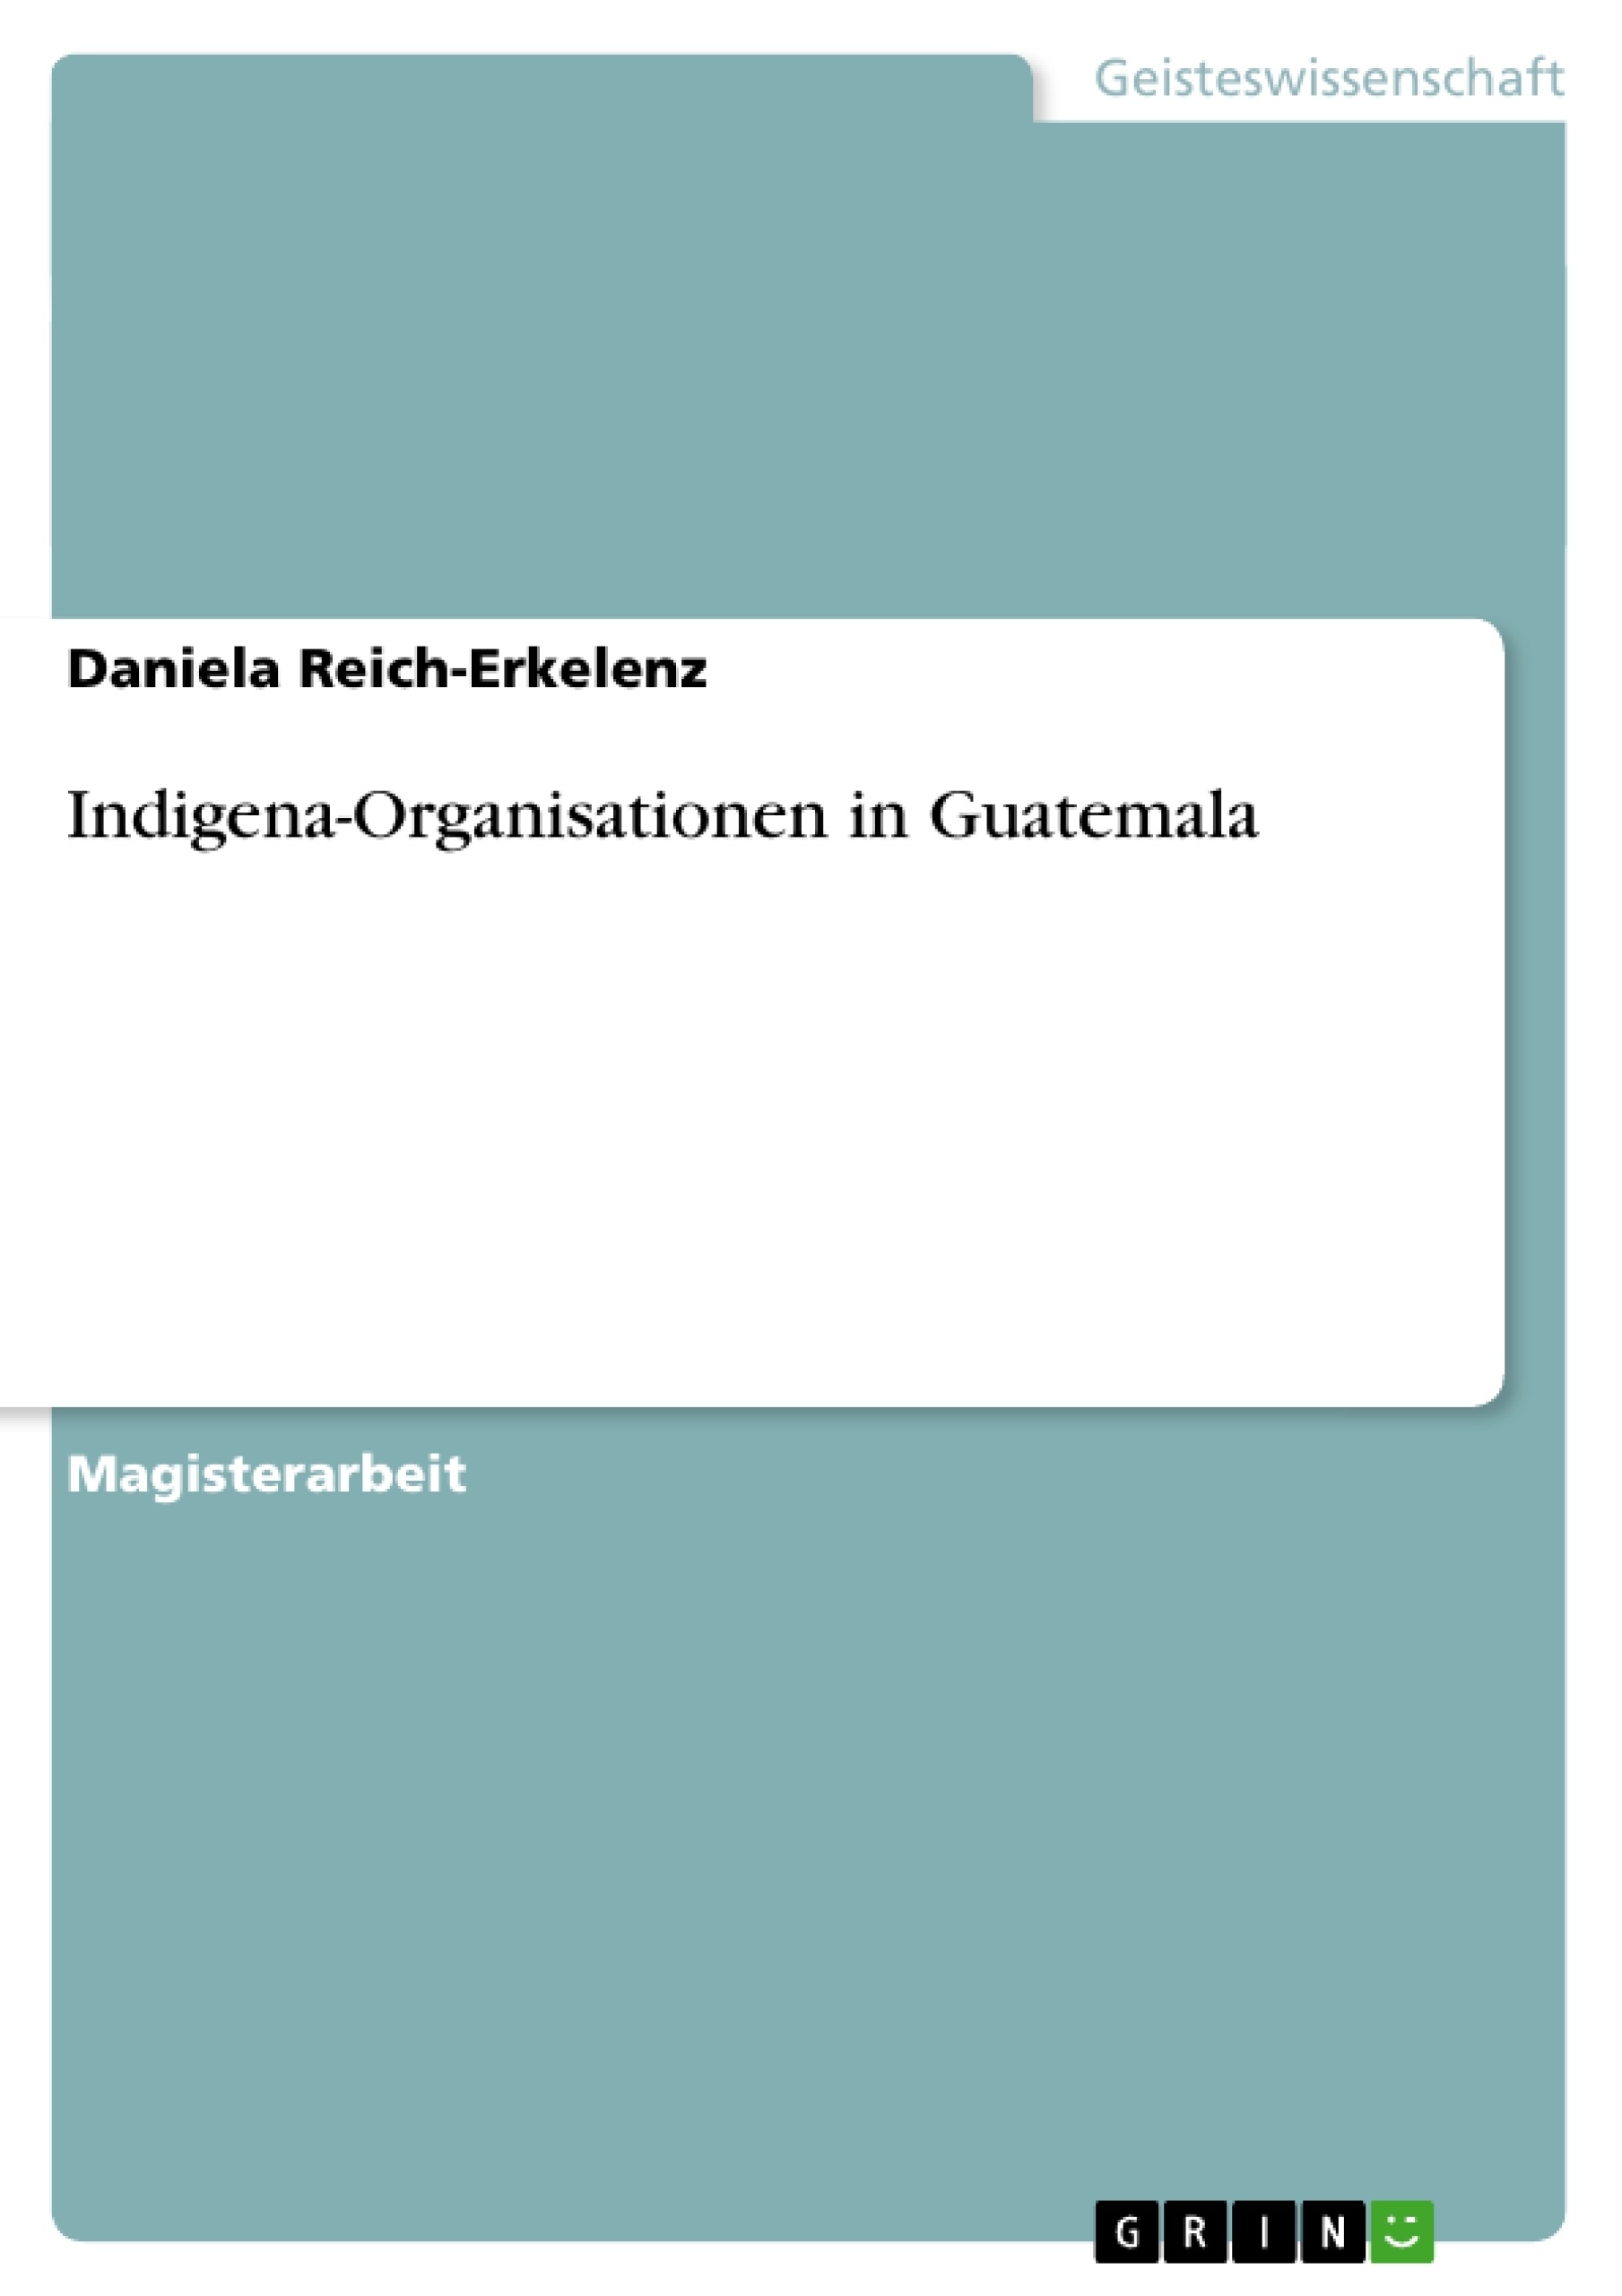 Título: Indigena-Organisationen in Guatemala